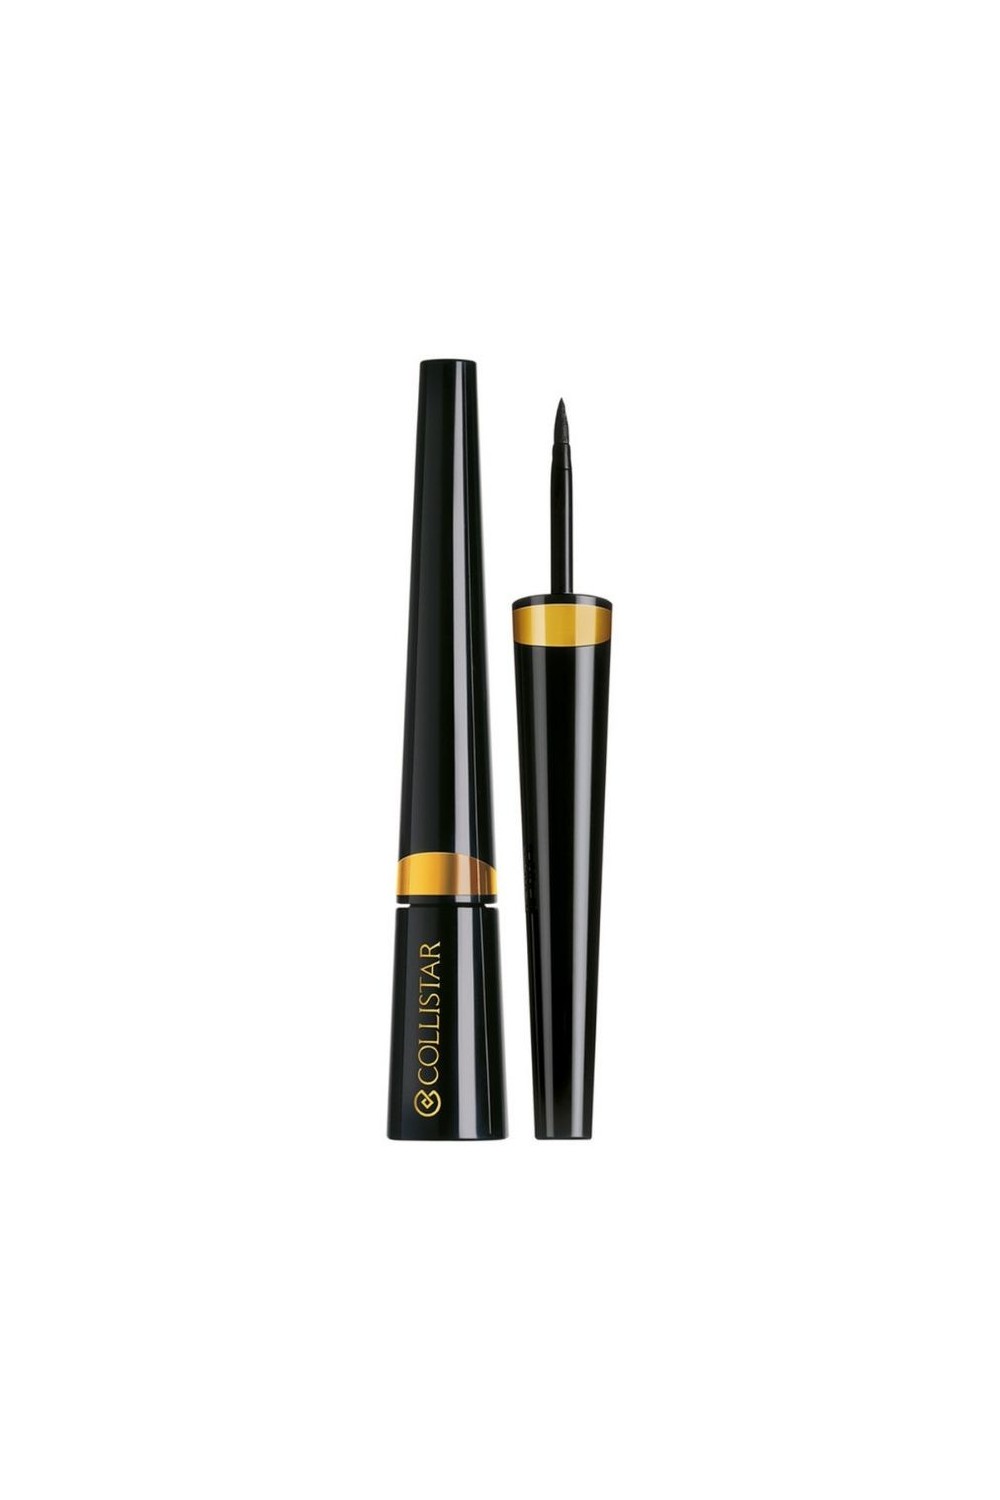 Collistar Tecnico Eyer Liner Pen Applicator Black 2,5ml